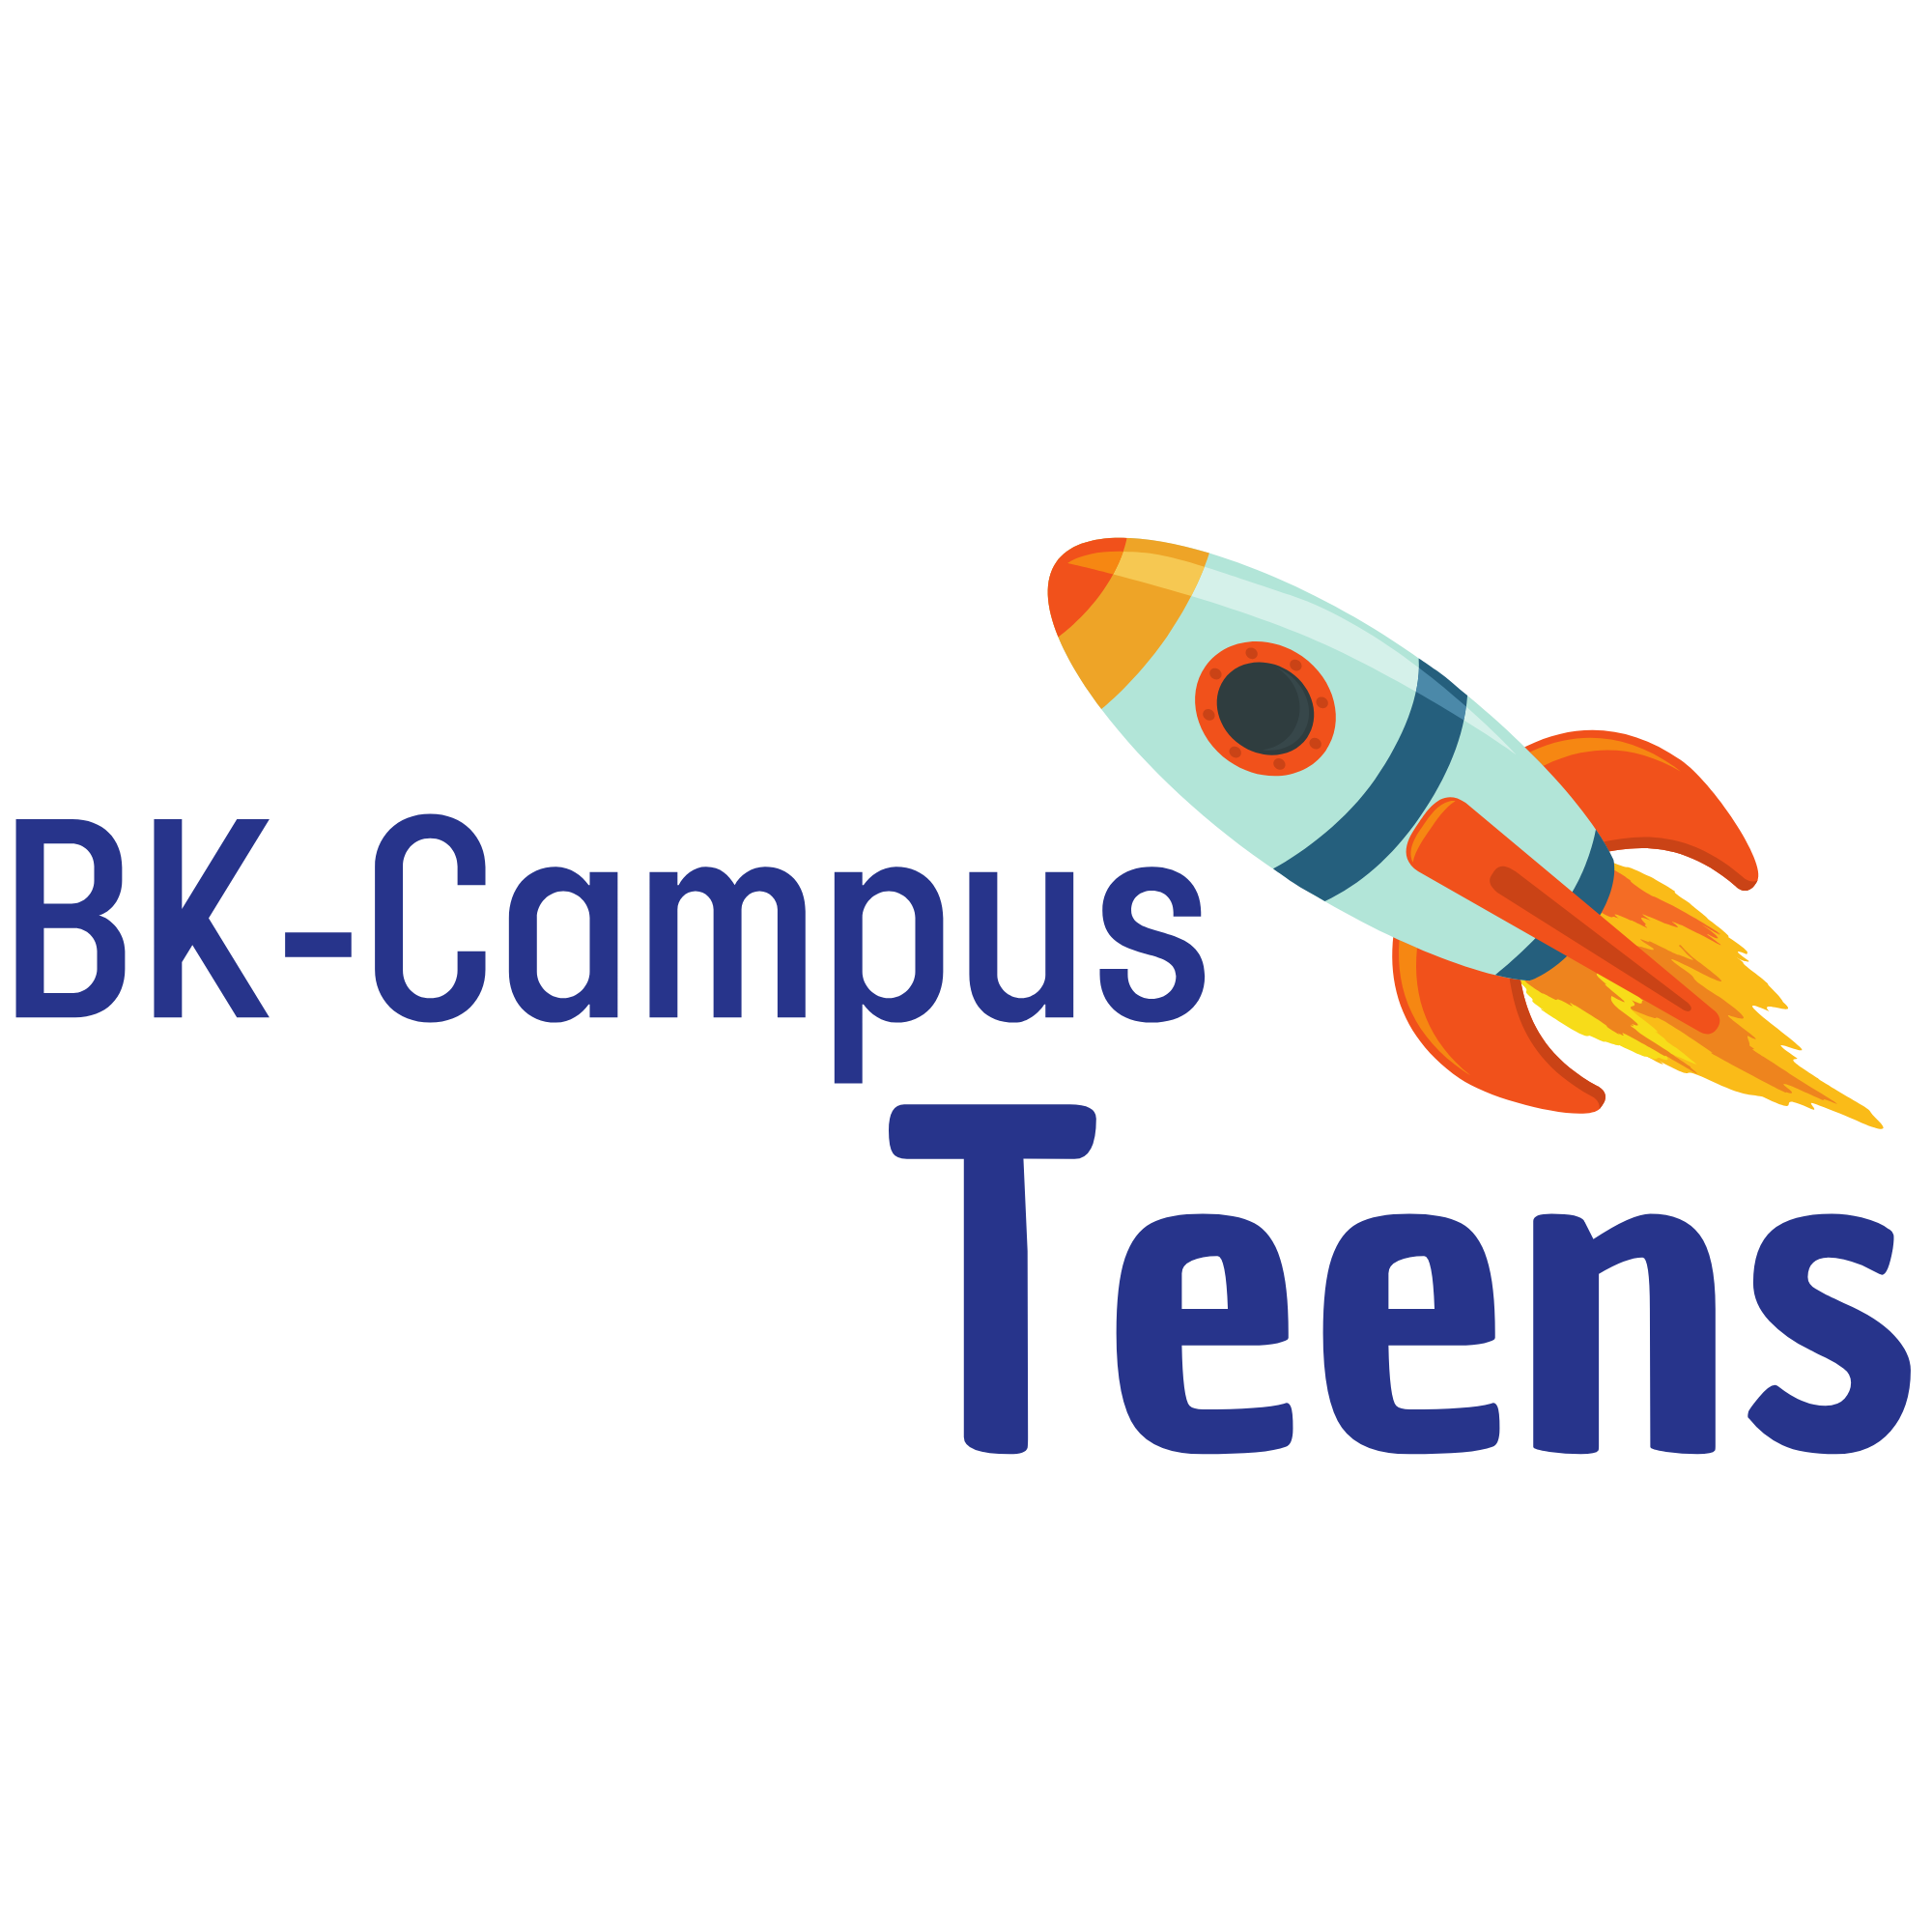 BK-Campus Teens